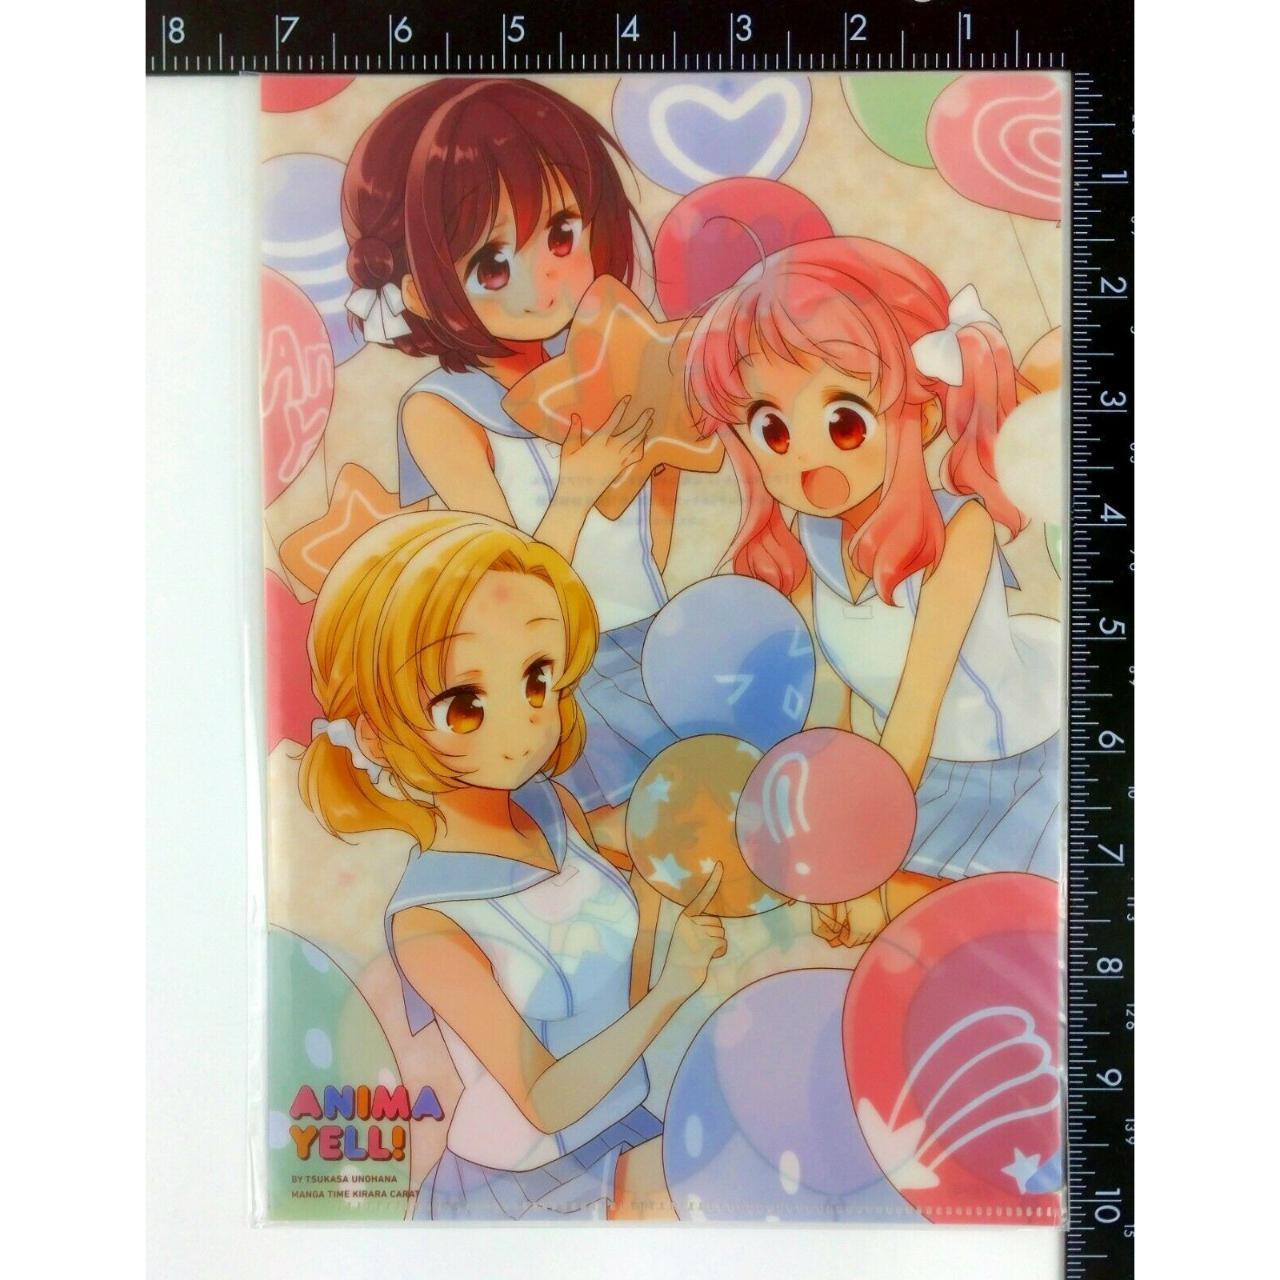 Mobile wallpaper: Anime, Hatoya Kohane, Sawatari Uki, Tatejima Kotetsu,  Anima Yell!, Arima Hizume, 912073 download the picture for free.